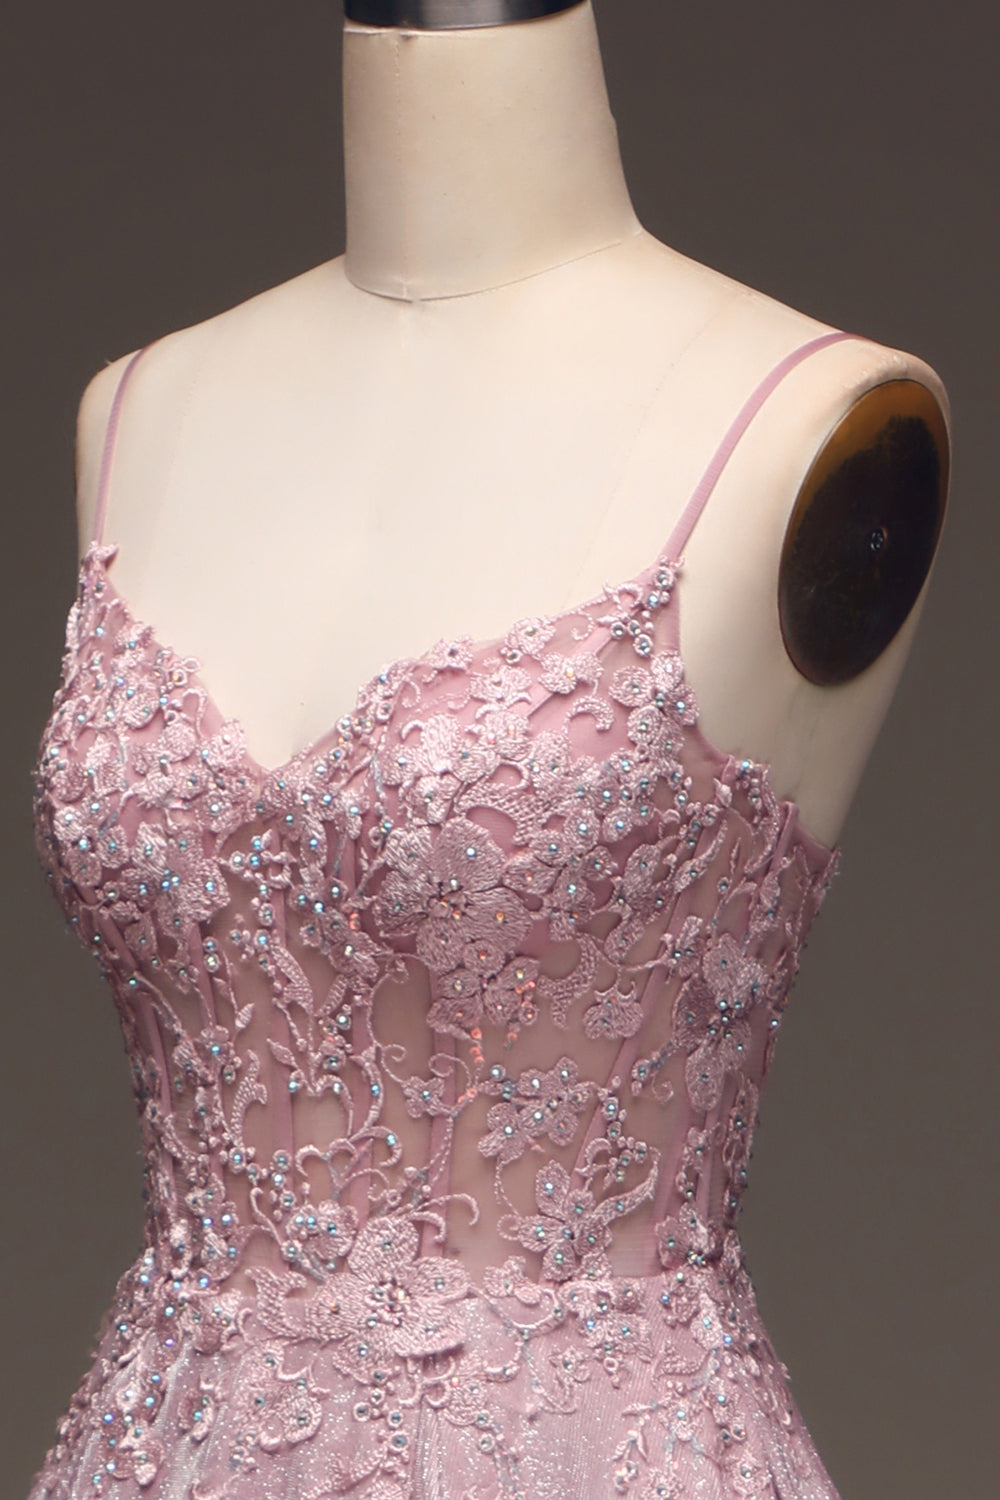 Glitter Spaghetti Straps Blush Prom Dress with Beading